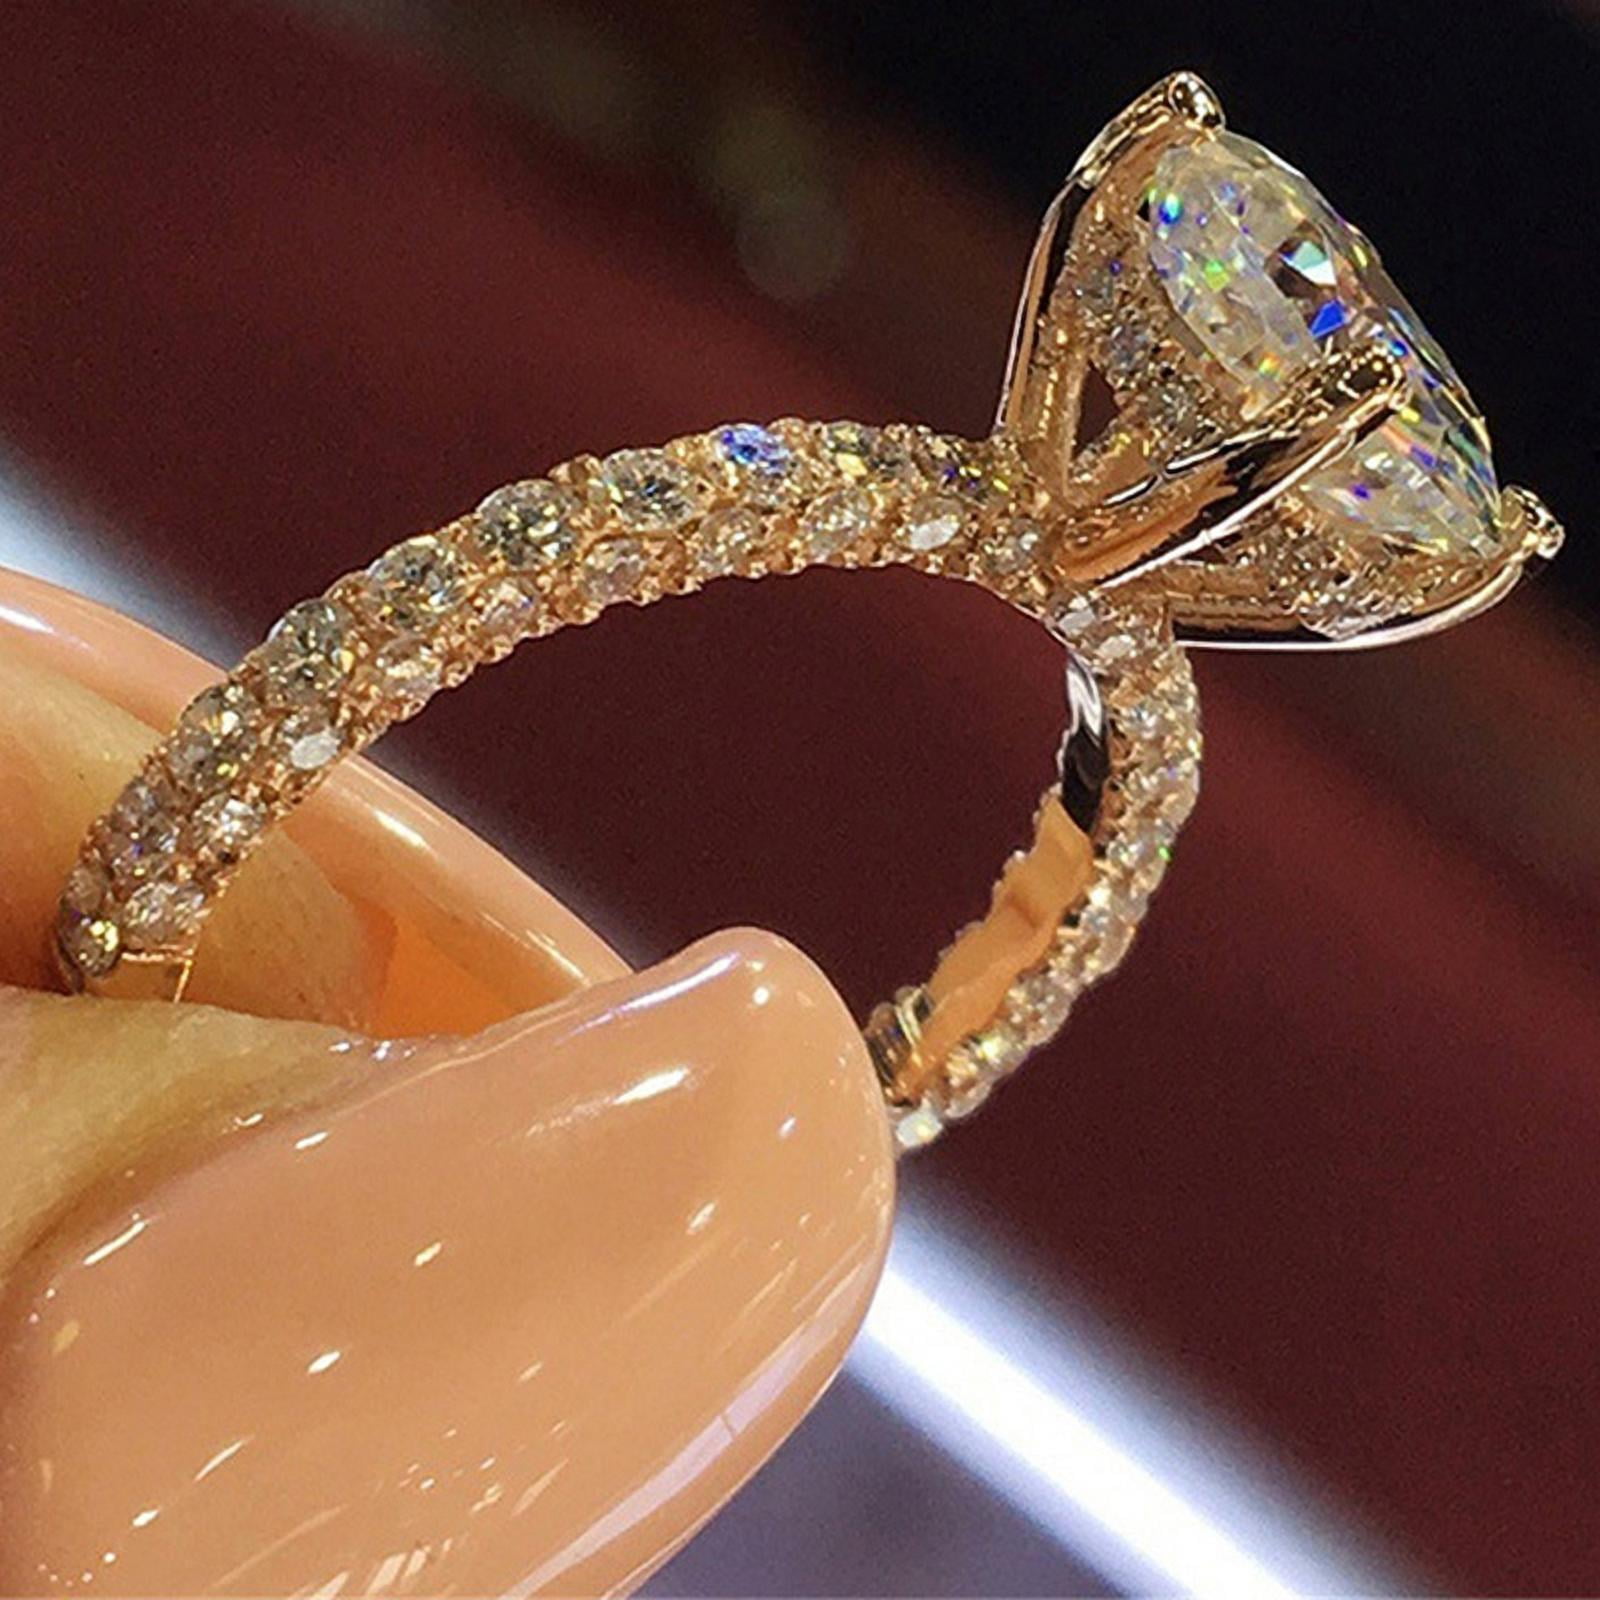 Graduated Single Prong Diamond Ring | Fashion rings, Big diamond engagement  rings, Big diamond rings